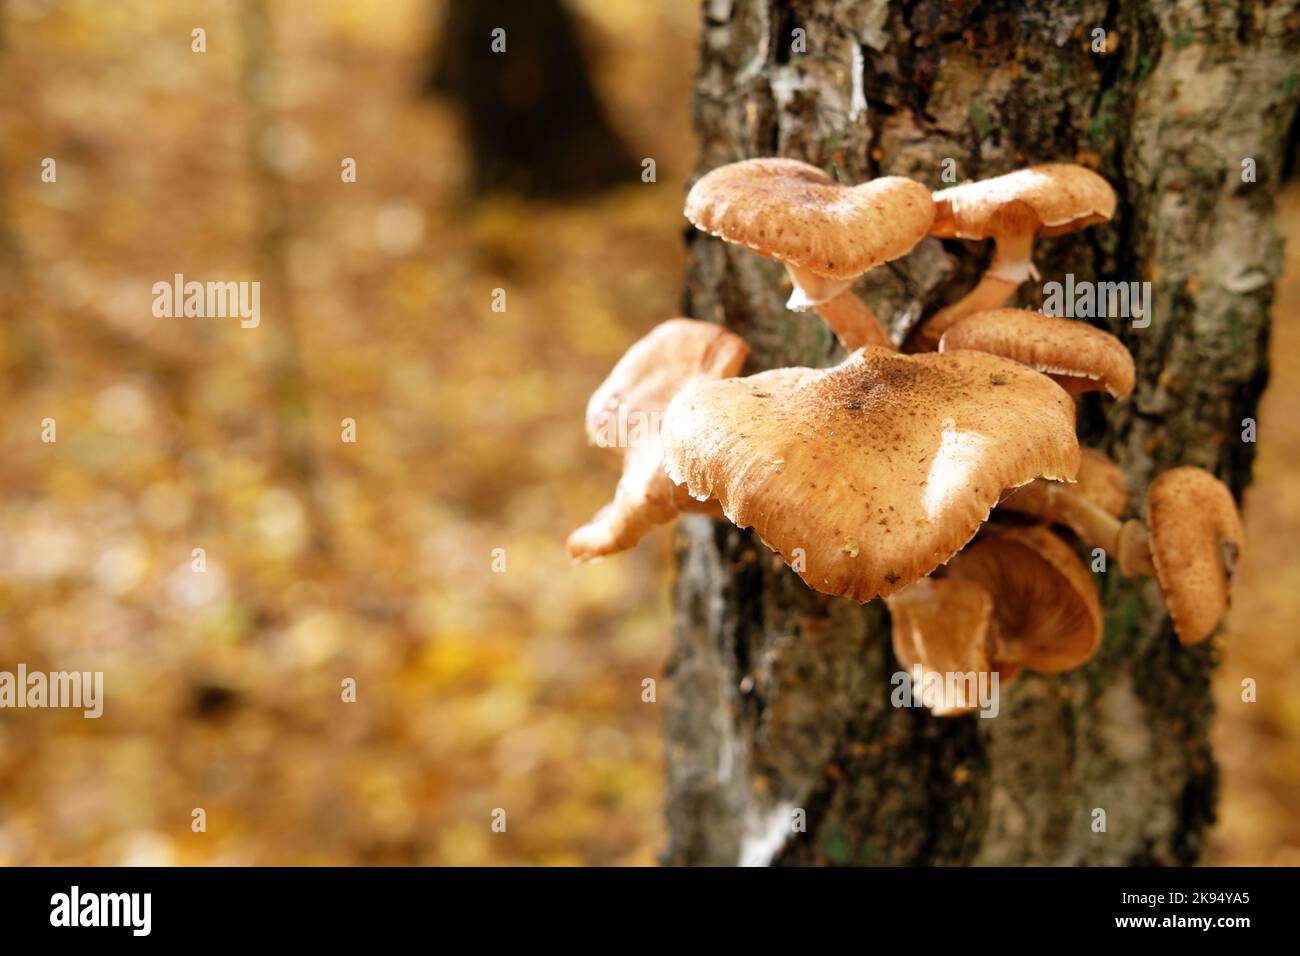 Armillaria mellea (honey fungus) plant pathogen but also edible mushroom growing around tree trunks Stock Photo